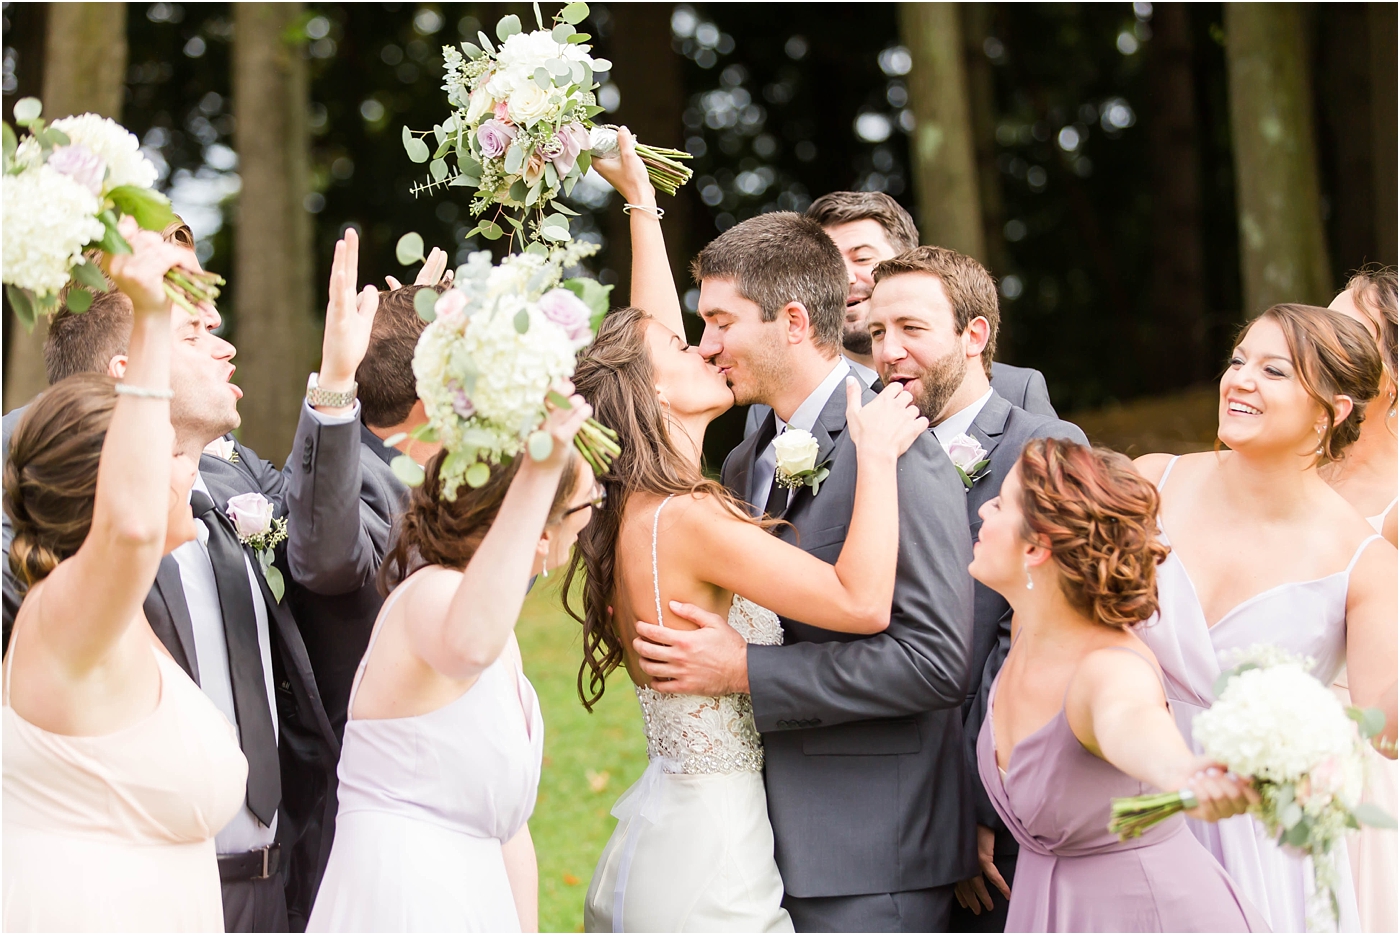 Glenmoor Country Club Weddings,Loren Jackson Photography,Photographer Akron Ohio,cleveland wedding photography,